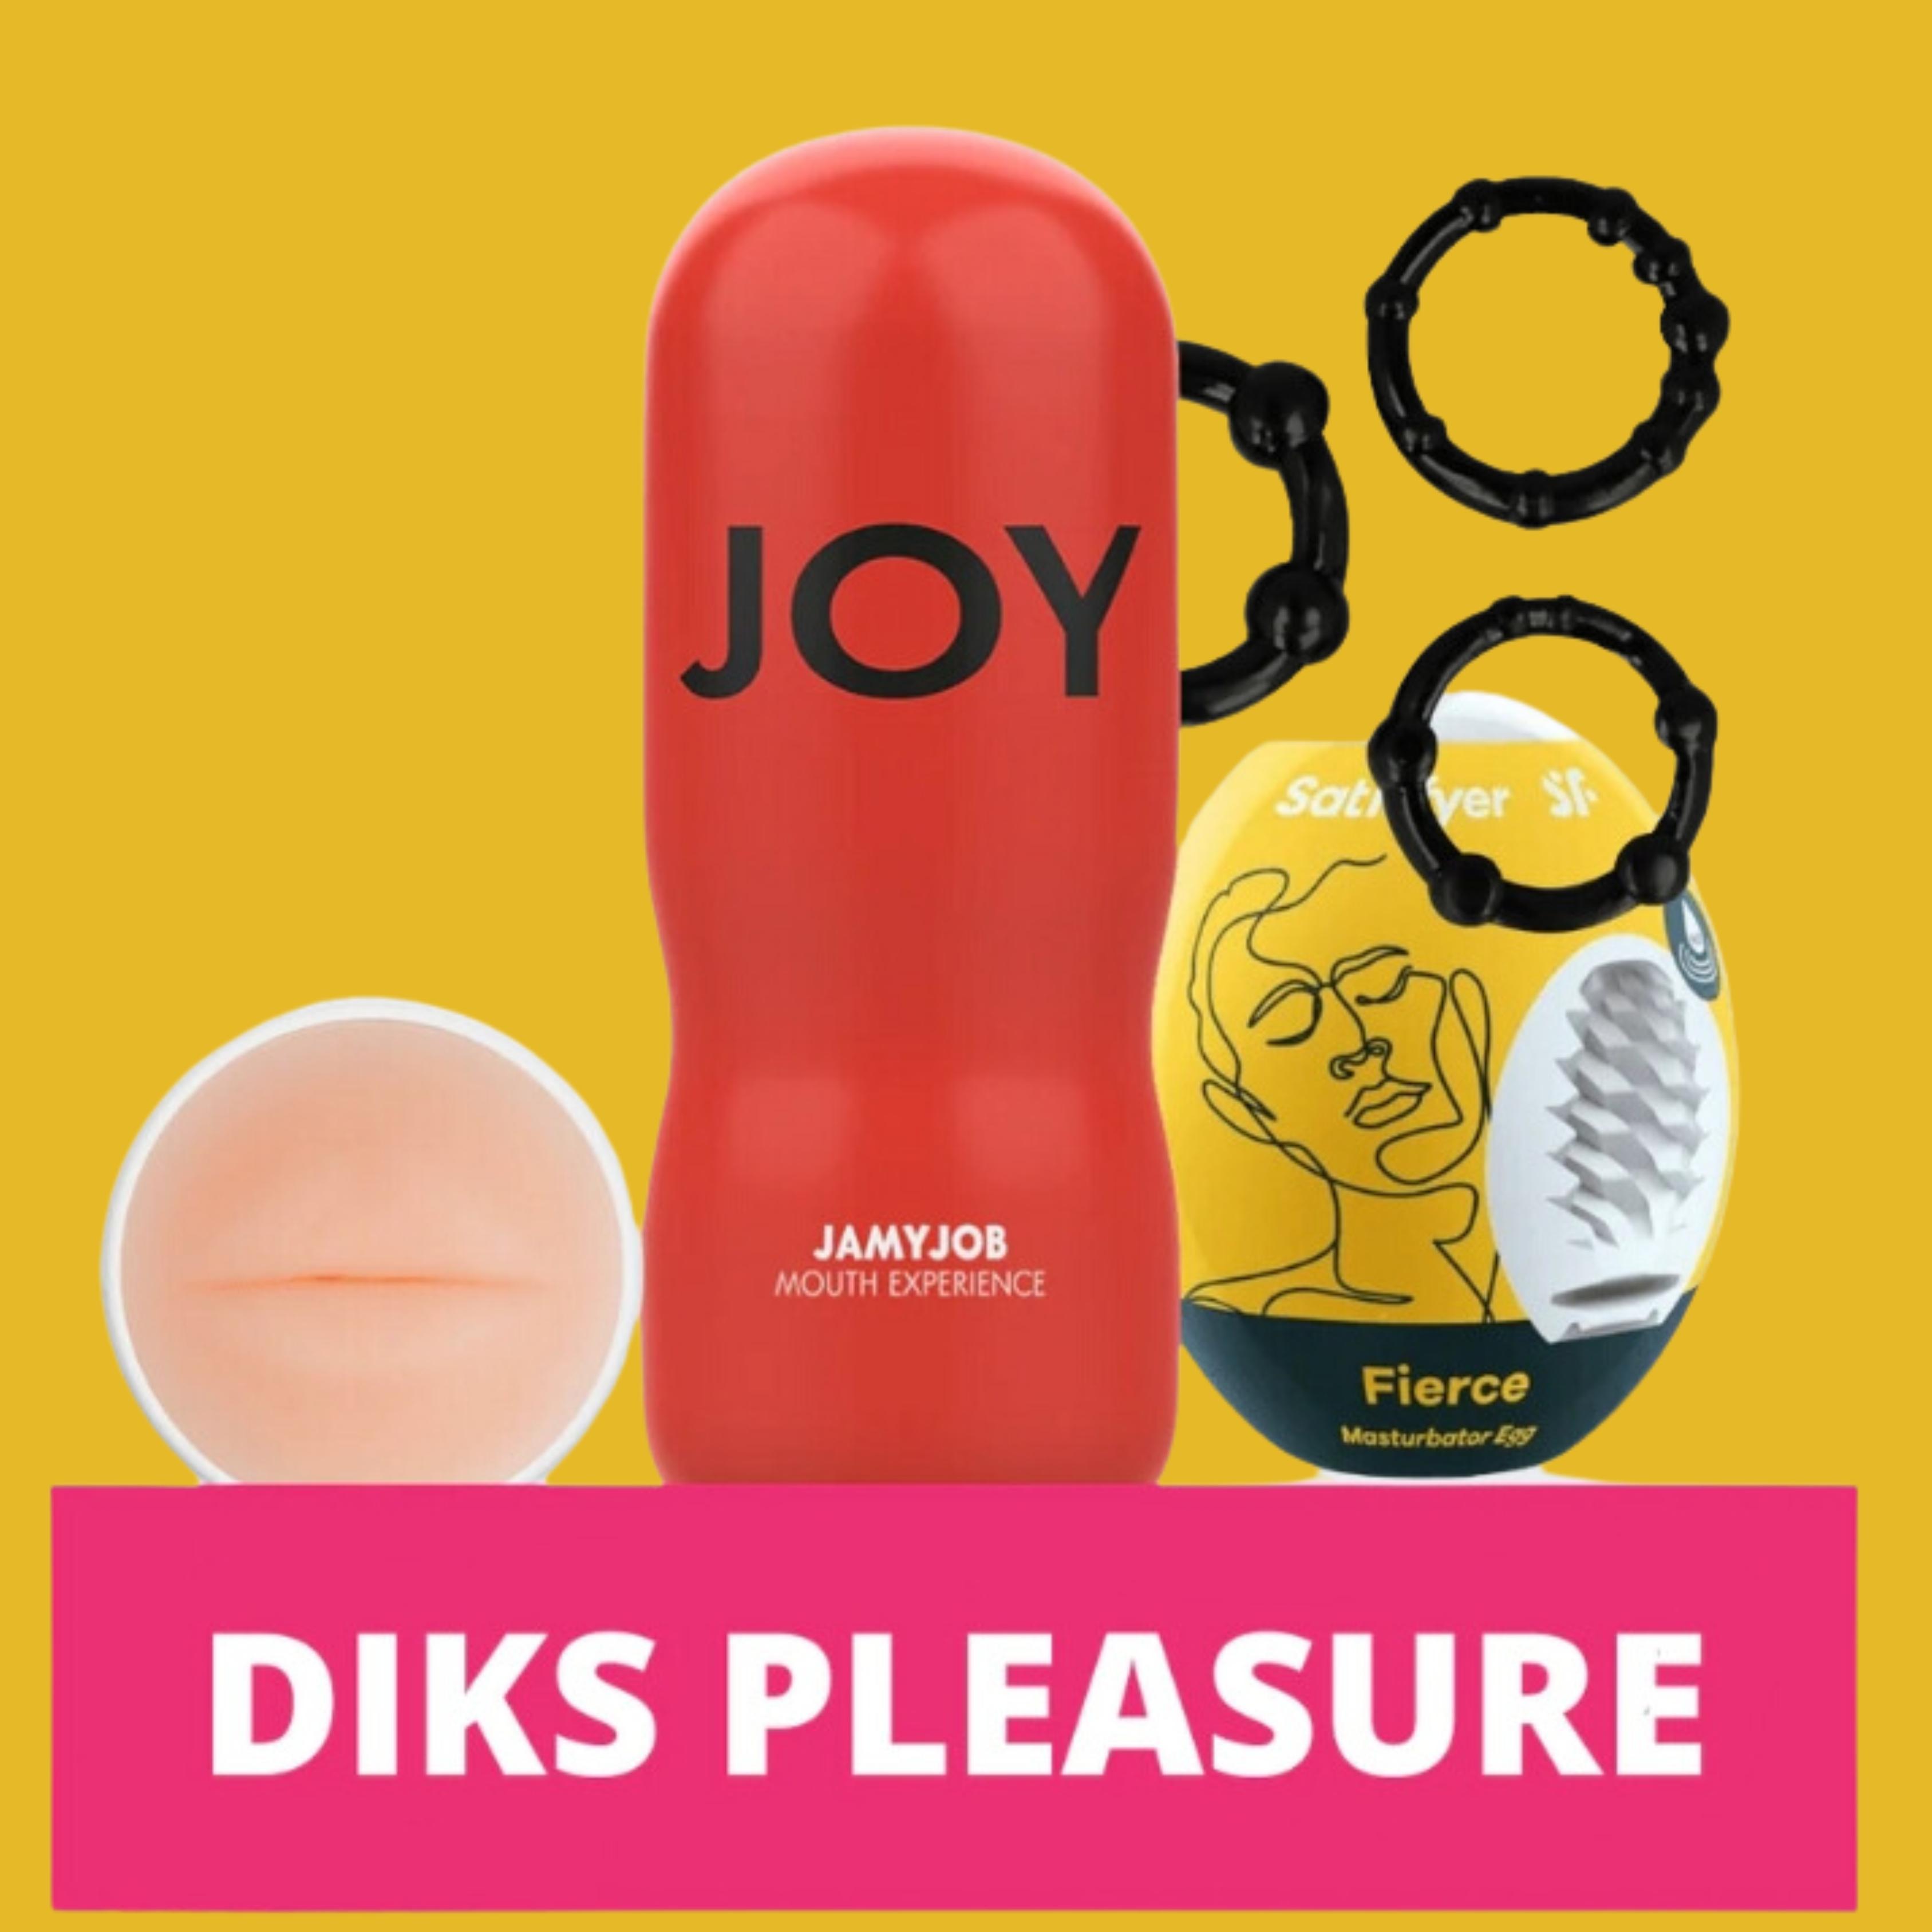 Imagen principal del producto Pack de placer para el pene- Diks pleasure pack